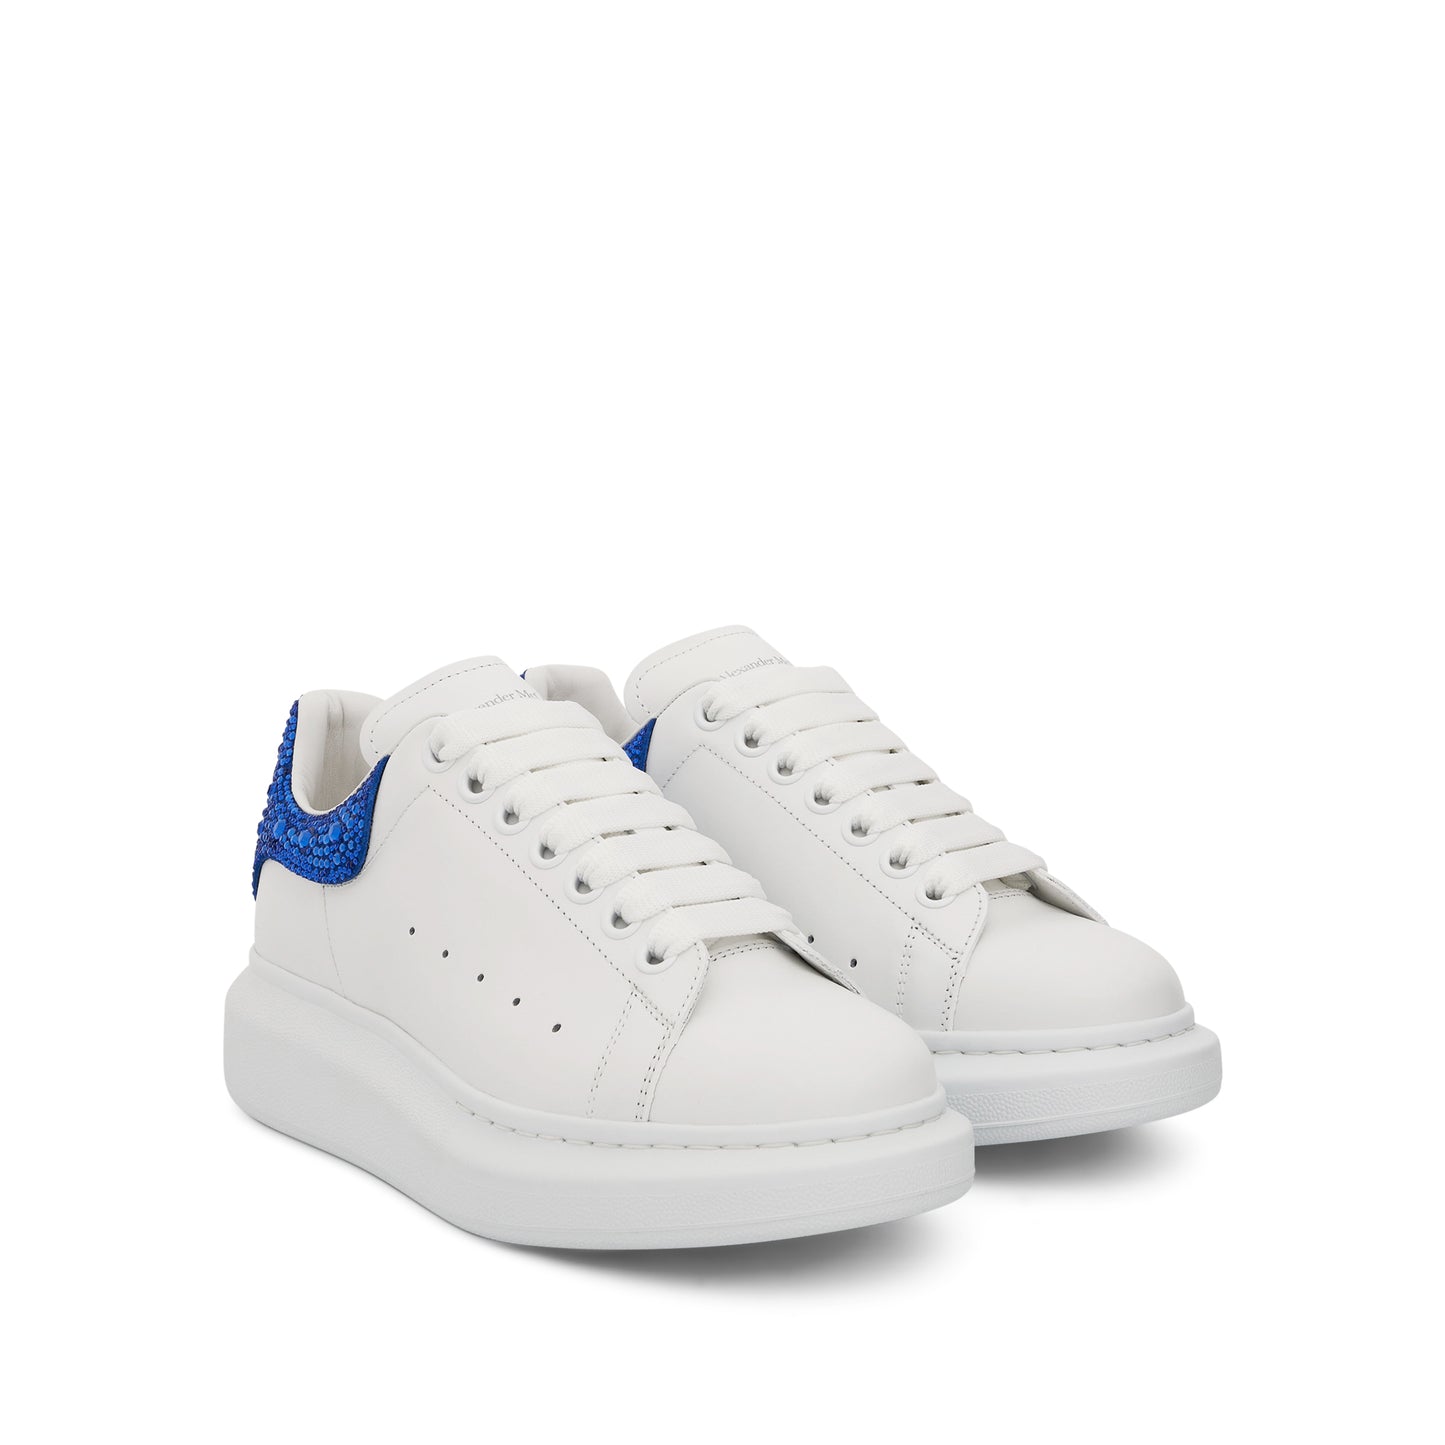 Larry Oversized Suede Strass Sneaker in White